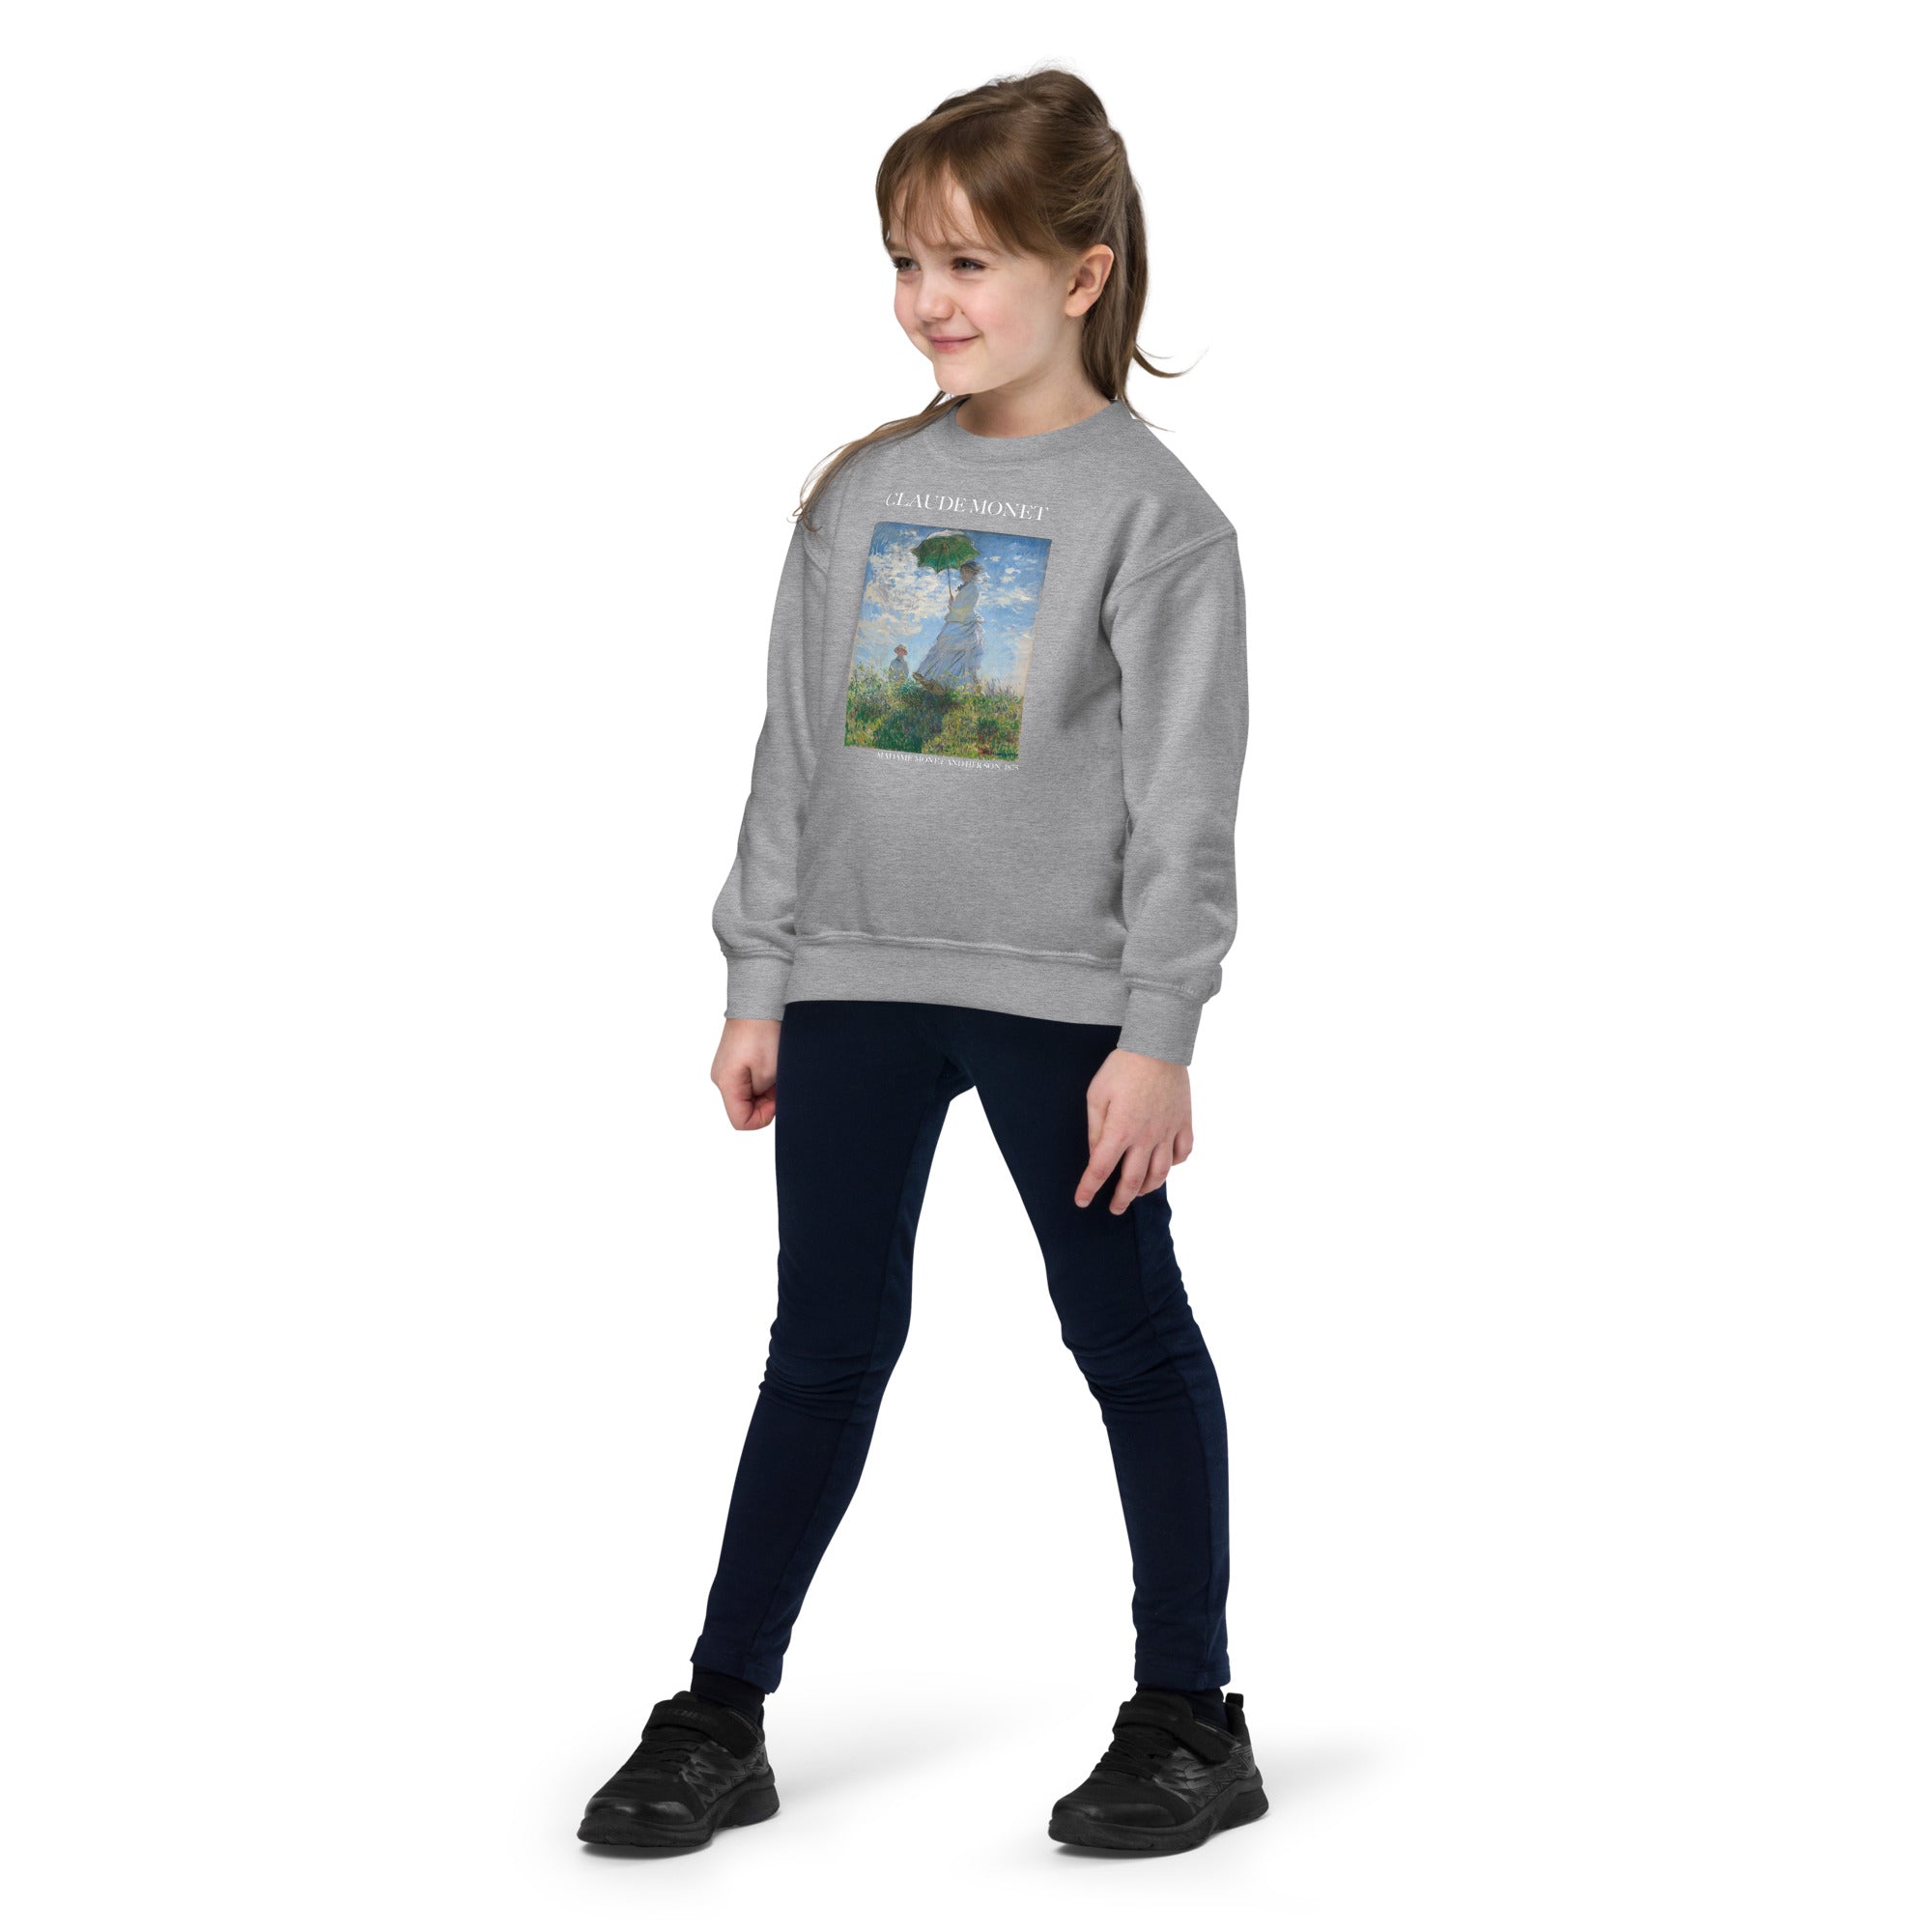 Claude Monet 'Madame Monet and Her Son' Famous Painting Crewneck Sweatshirt | Premium Youth Art Sweatshirt